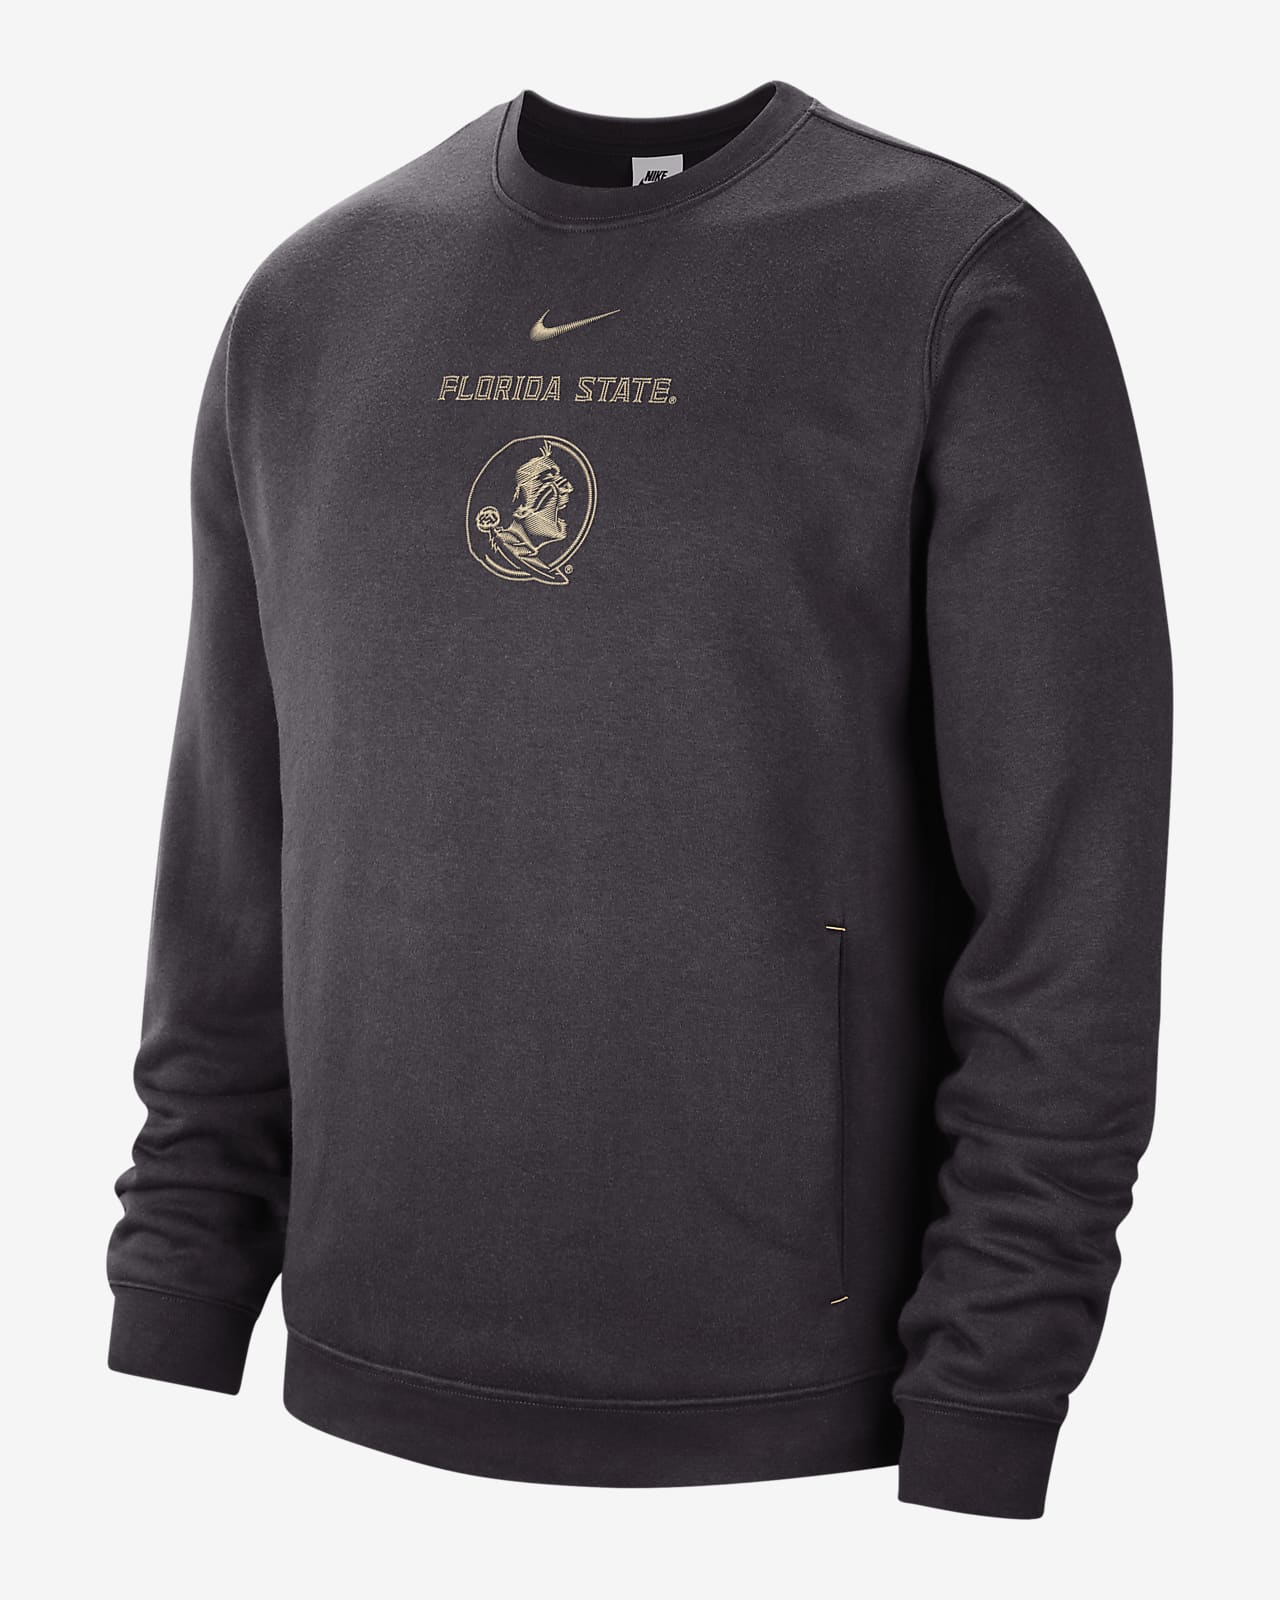 Nike College Club Fleece (Florida State) Men's Sweatshirt